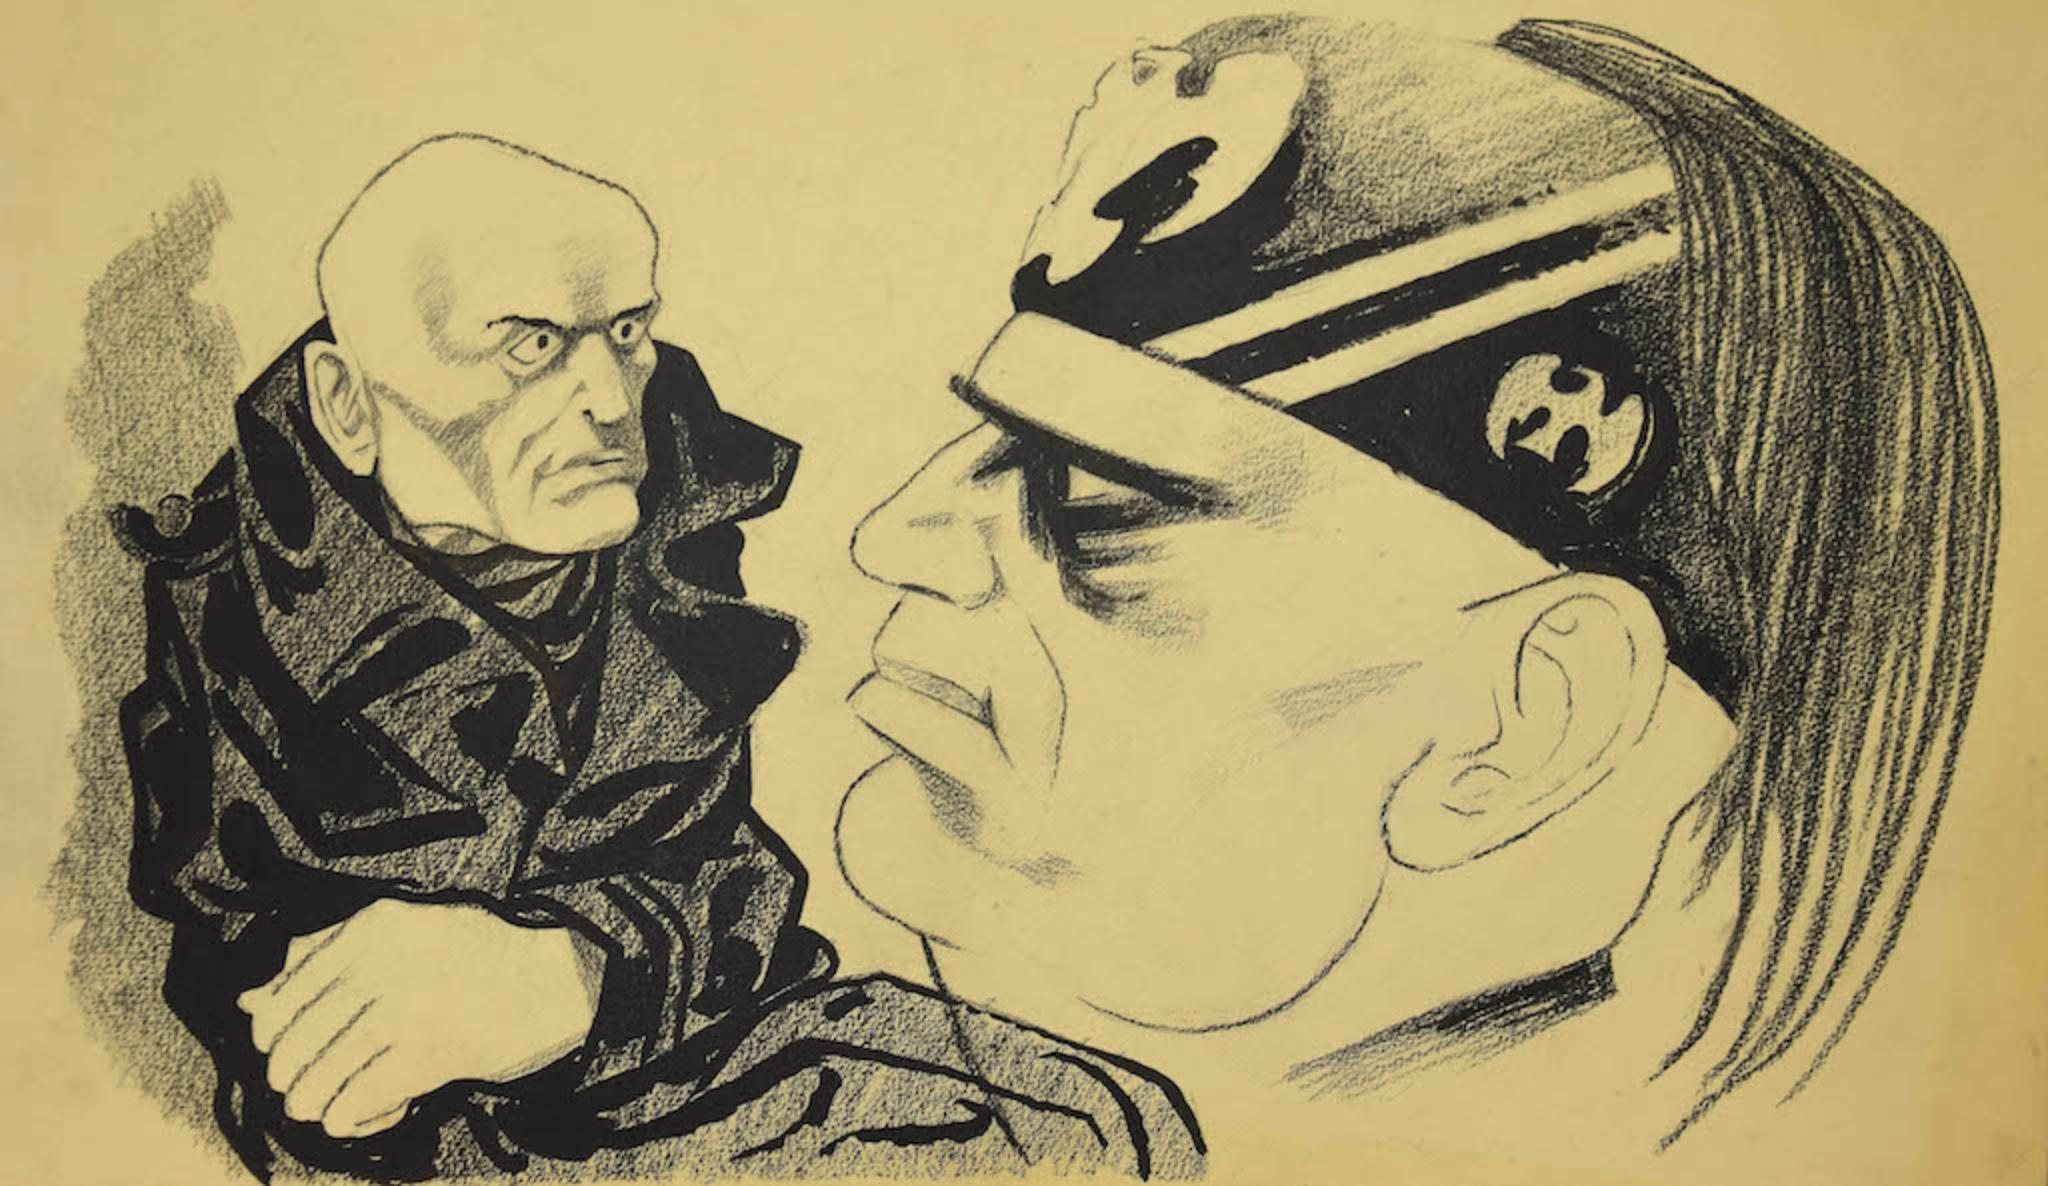 The Dictator - Ink by Adolf Reinhold Hallman - 1938